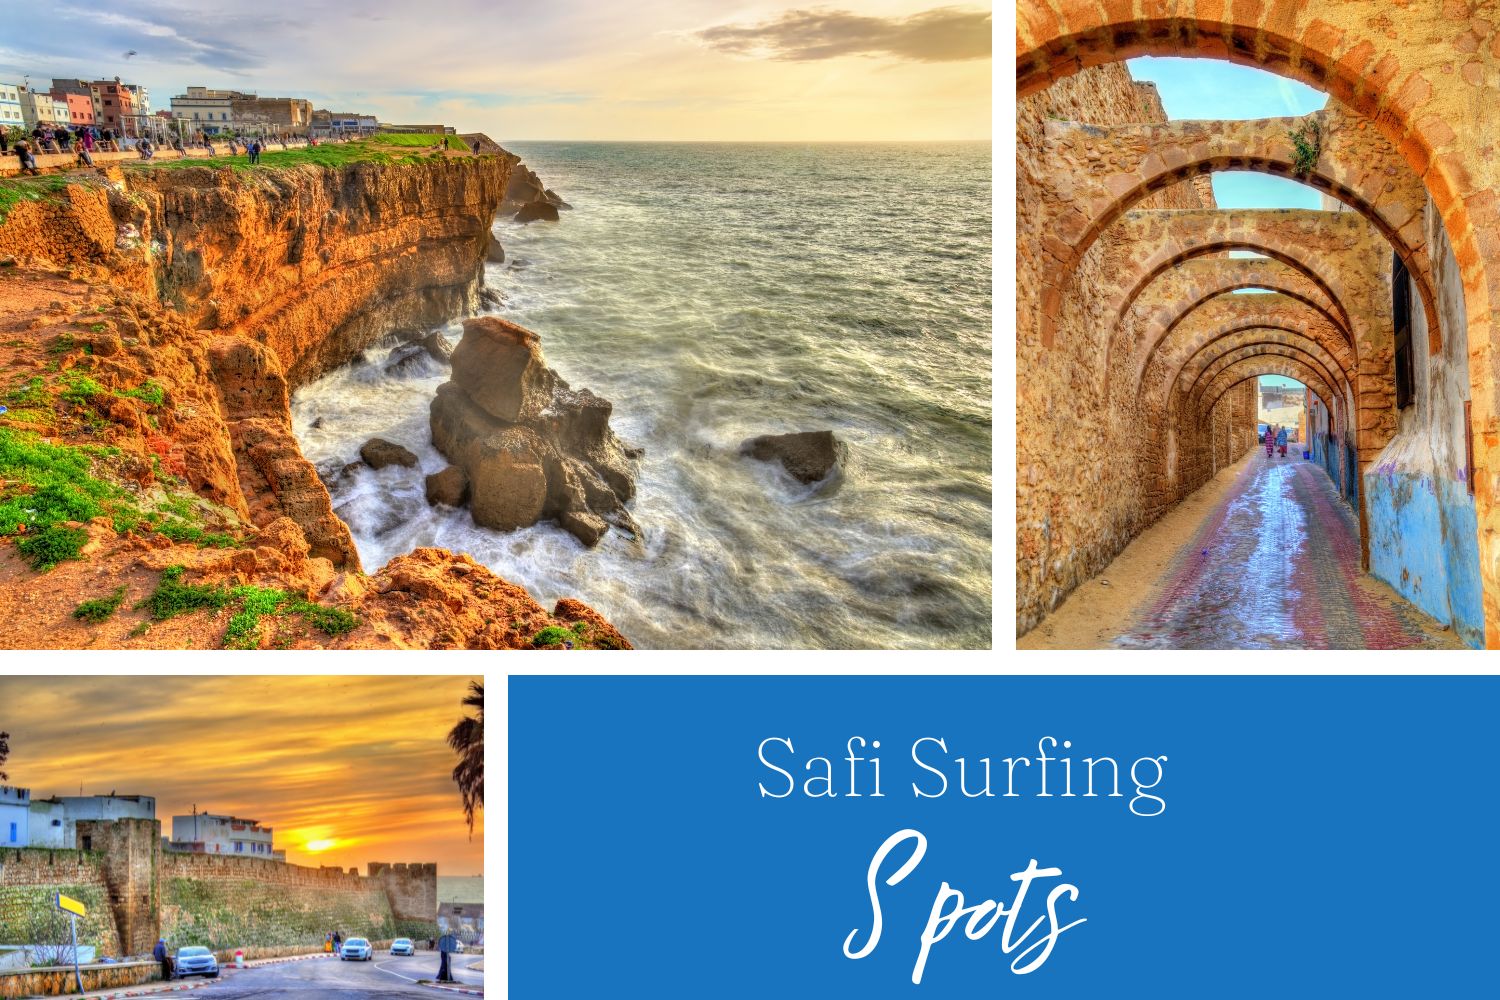 Safi Surfing Spots